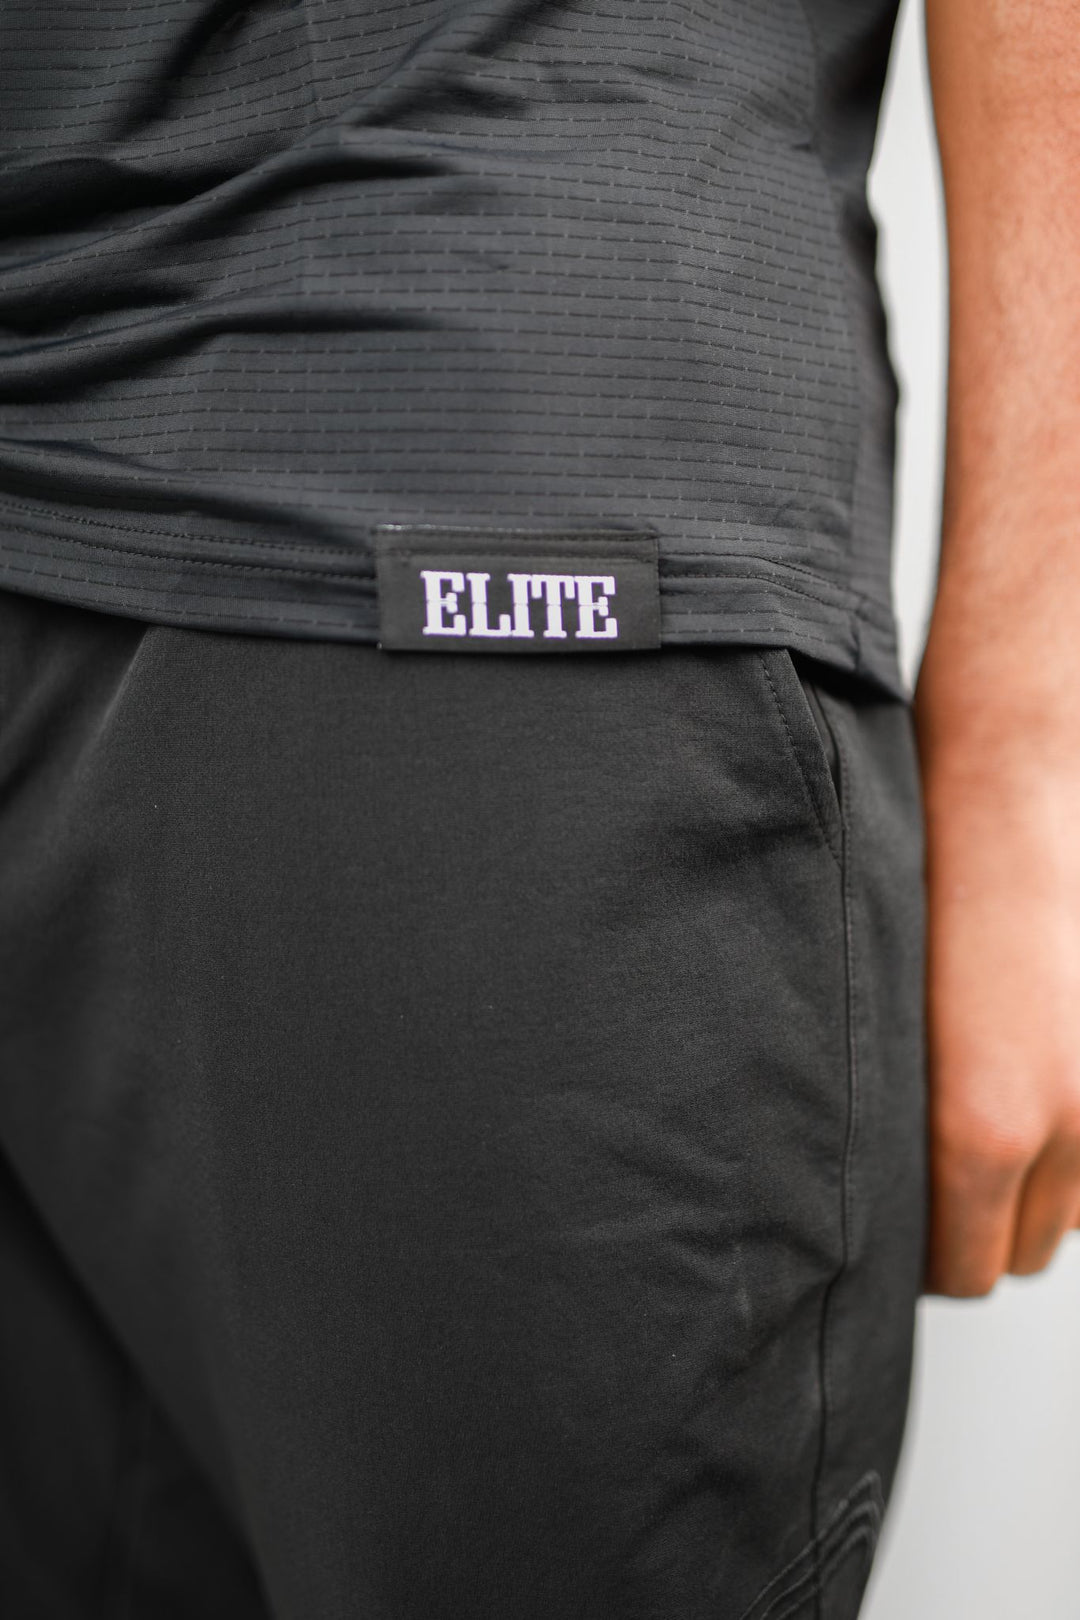 Elite - Performance Shirt Black